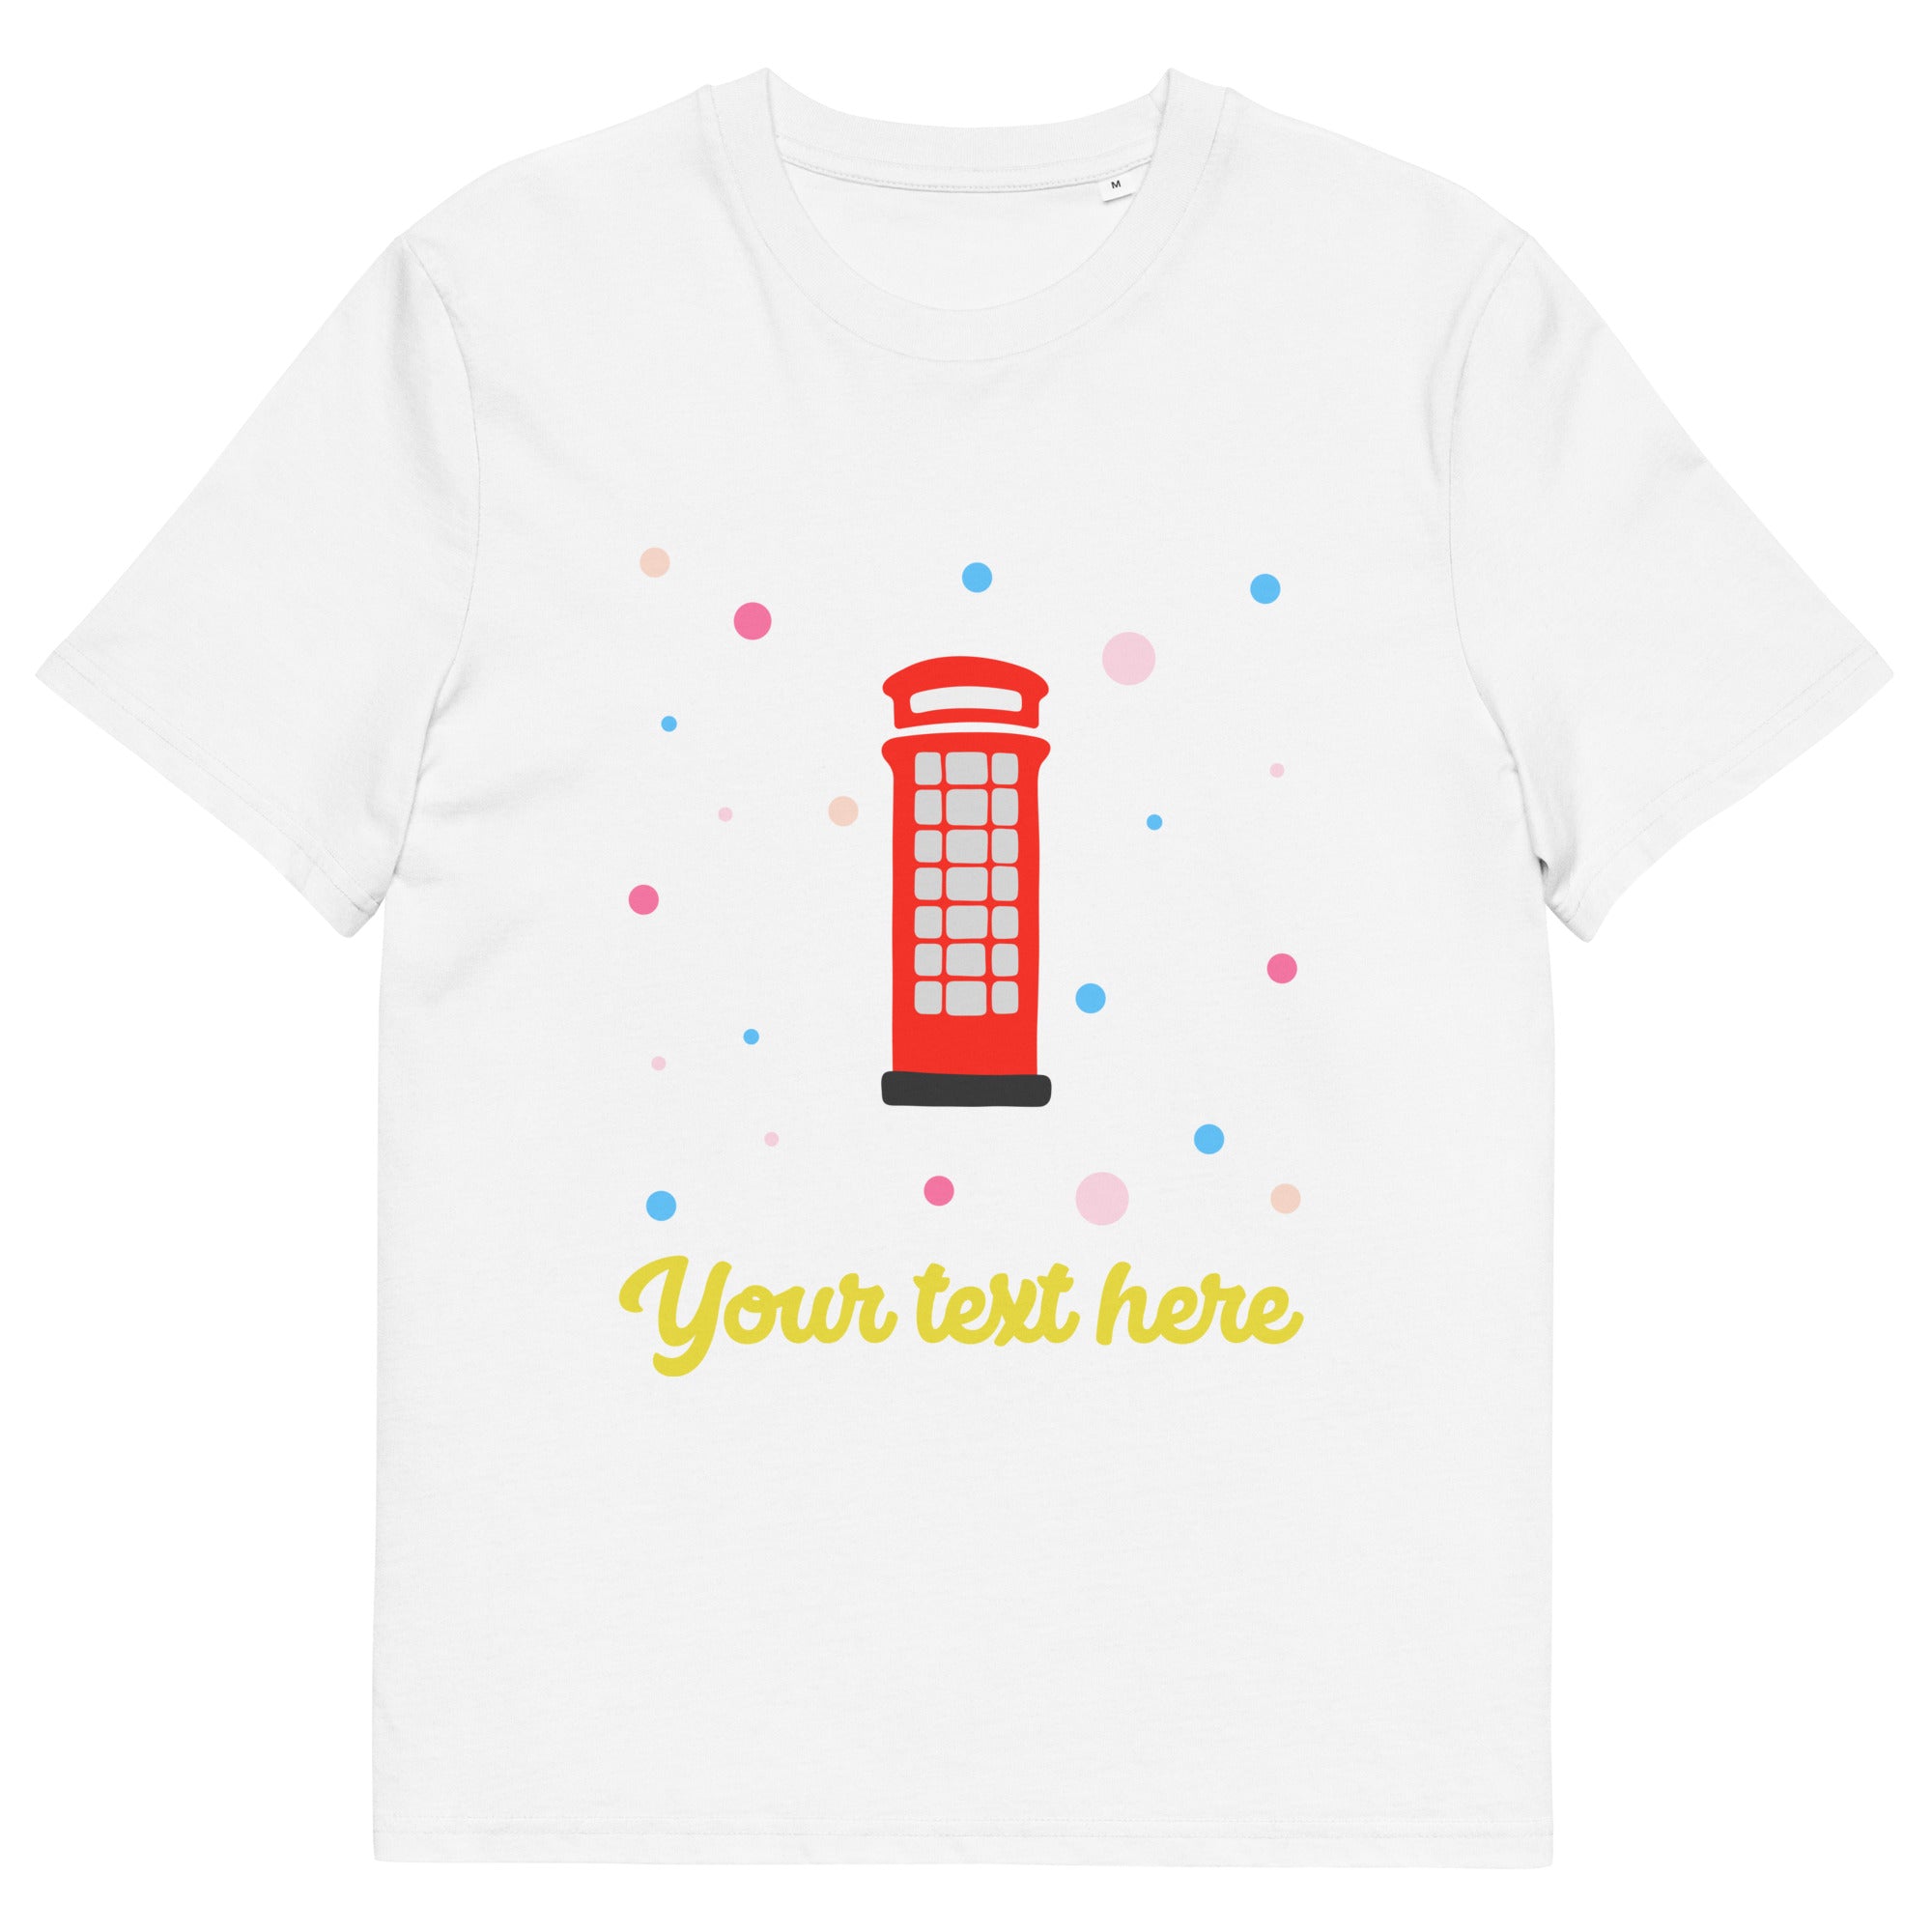 Personalised Custom Text - Organic Cotton Adults Unisex T-Shirt - London Doodles - Telephone Box